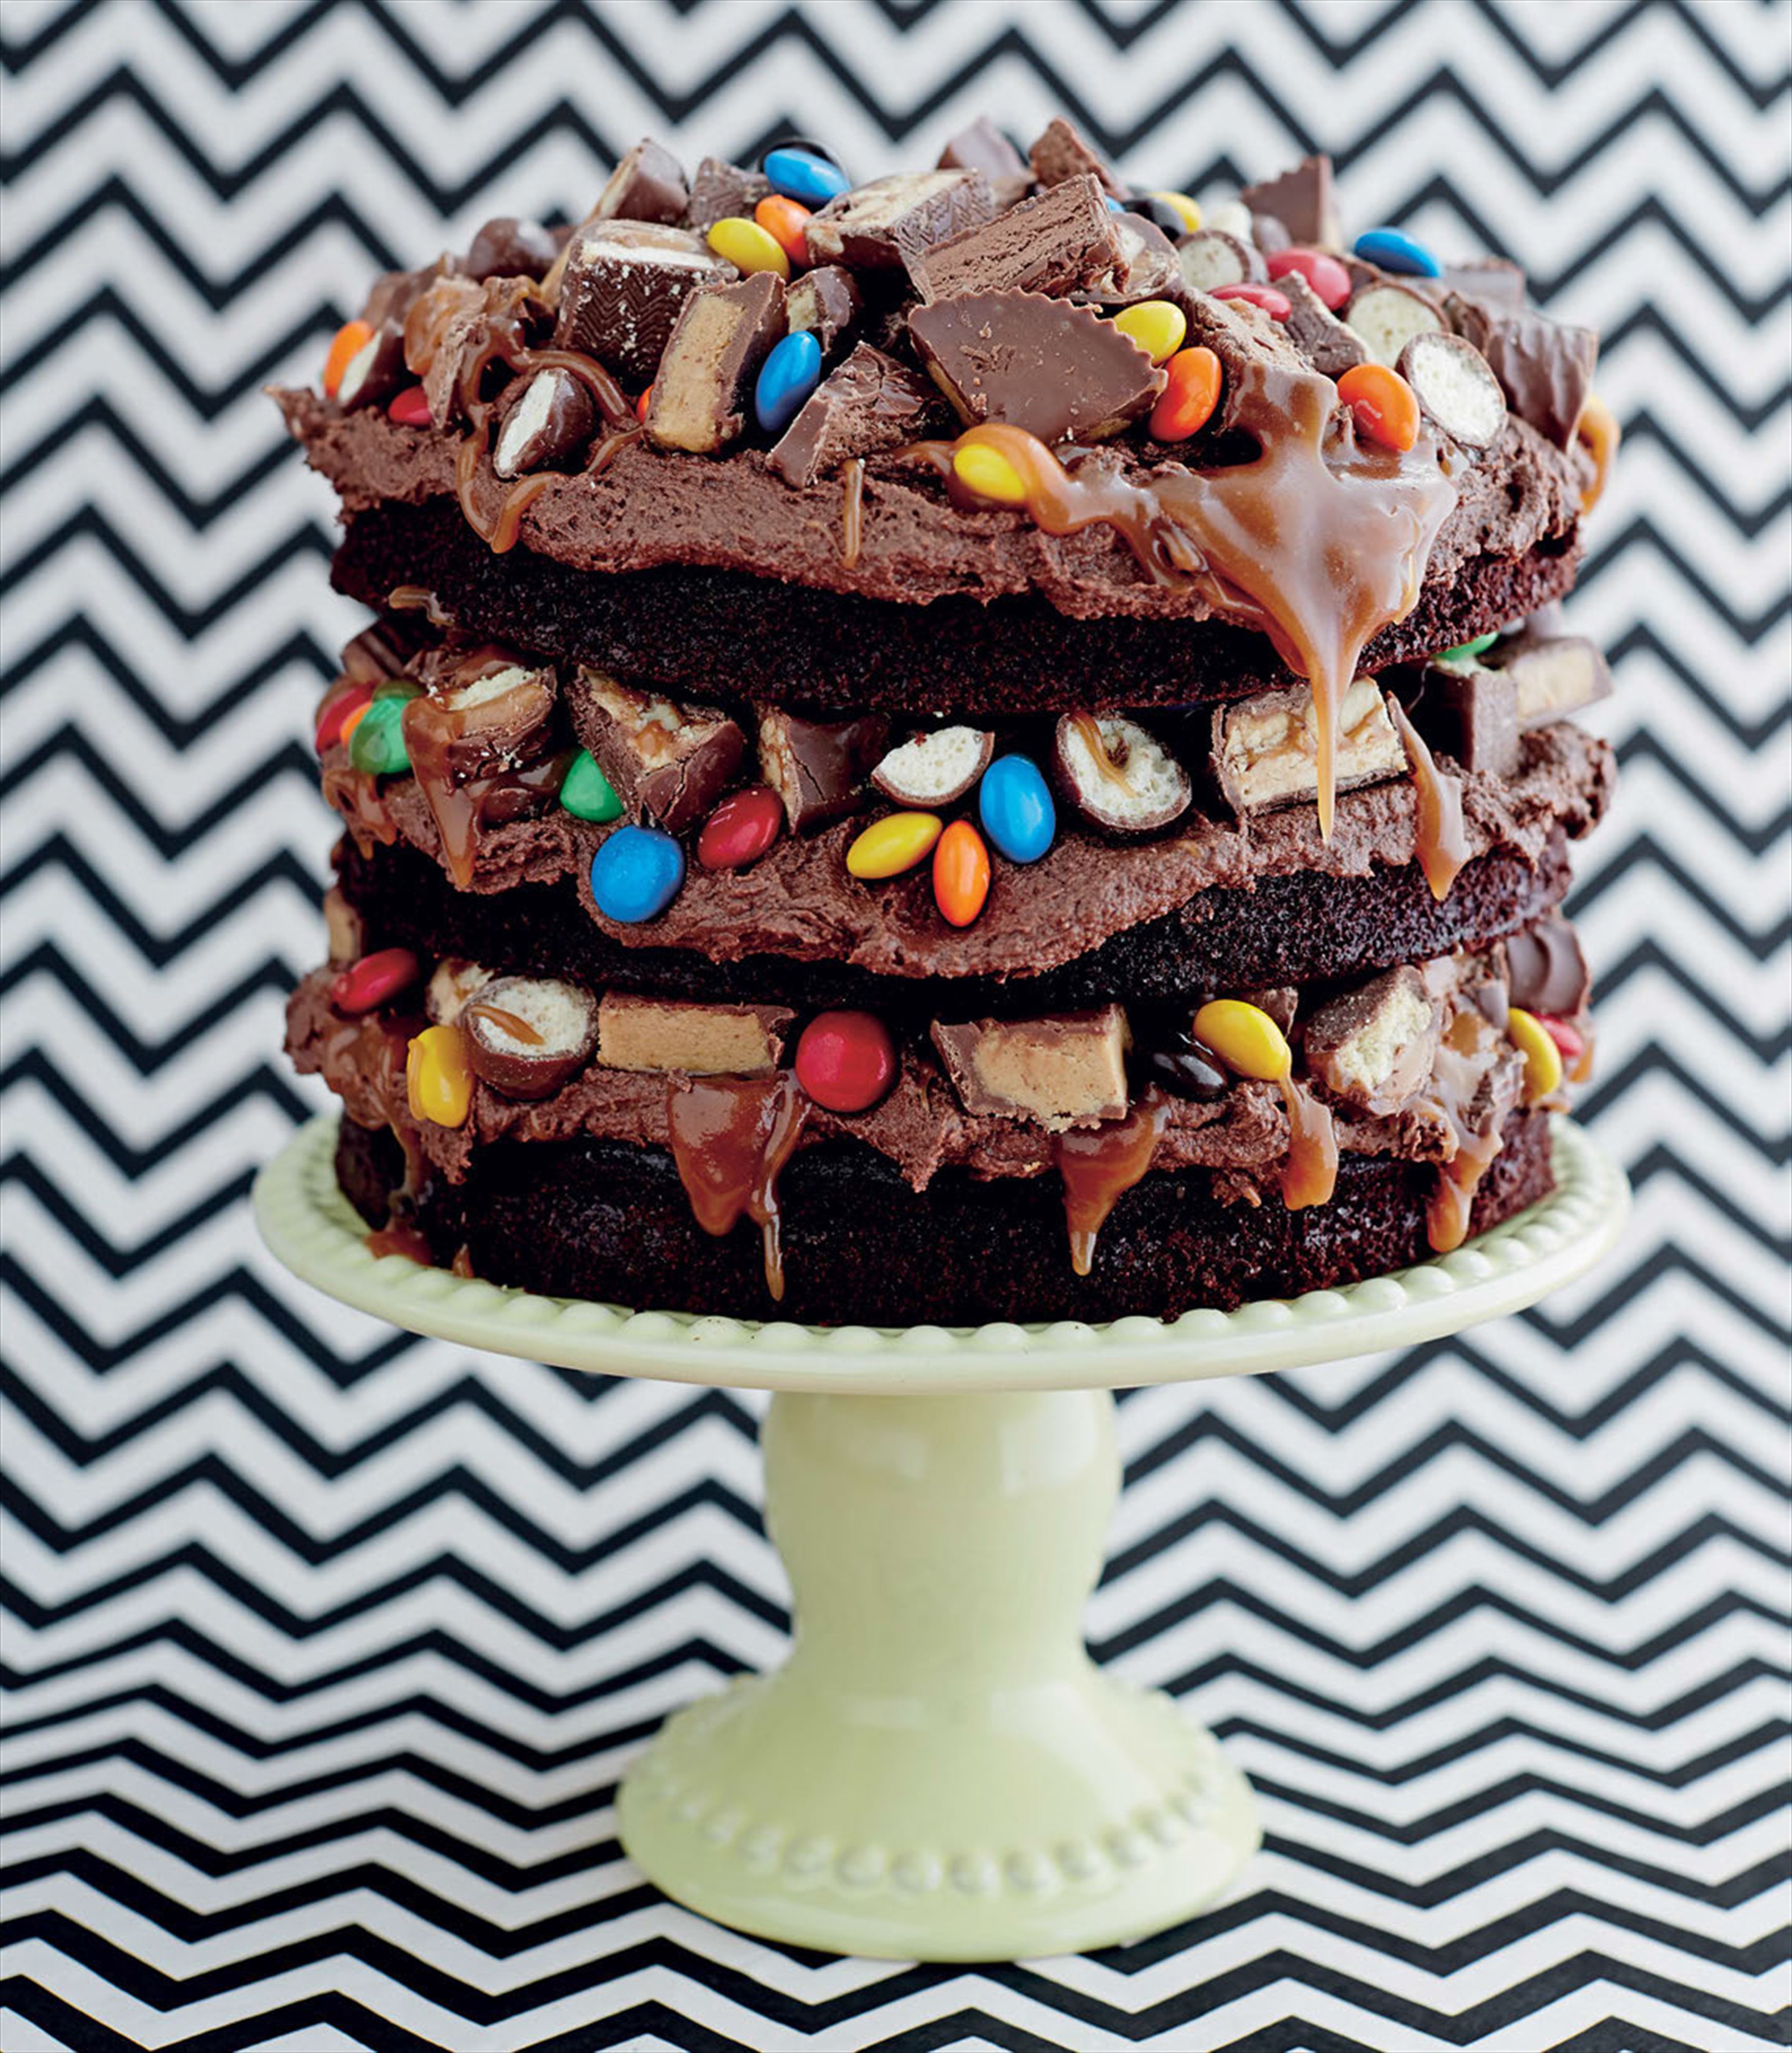 Epic candy bar layer cake